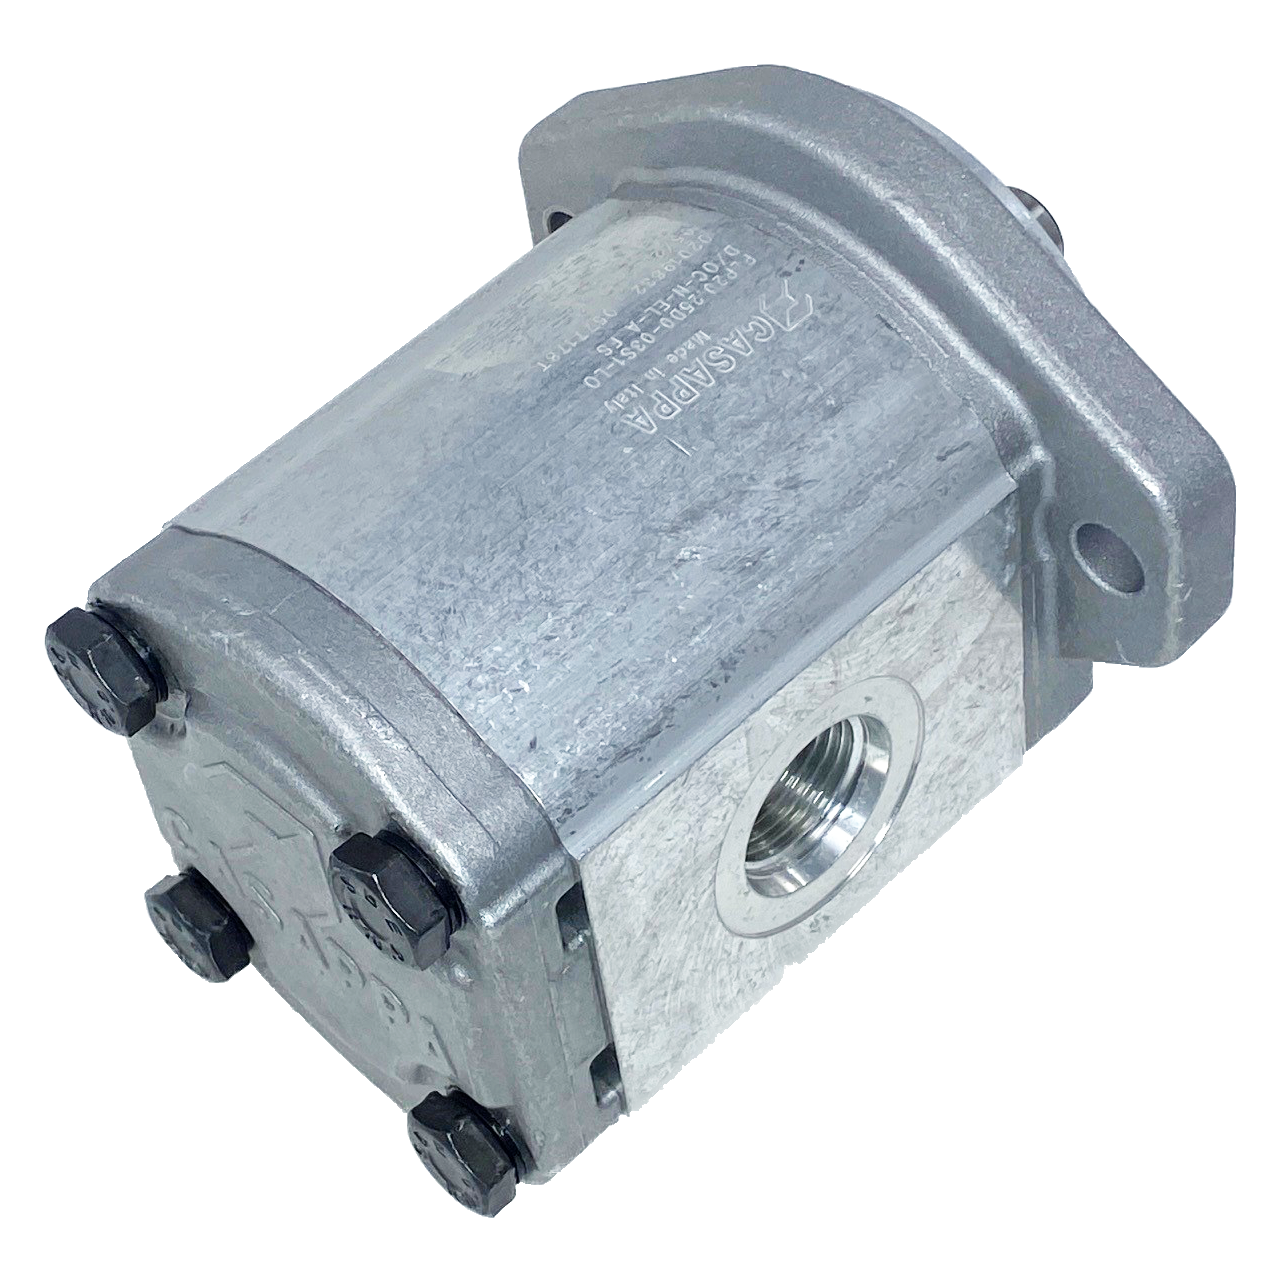 PLM20.25R0-31S1-LOC/OD-N-EL : Casappa Polaris Gear Motor, 26.42cc, 2465psi Rated, 3045RPM, Reversible Rear External Drain, 5/8" Bore x 5/32" Key Shaft, SAE A 2-Bolt Flange, 0.625 (5/8") #10 SAE Inlet, 0.75 (3/4") #12 SAE Outlet, Aluminum Body & Flange